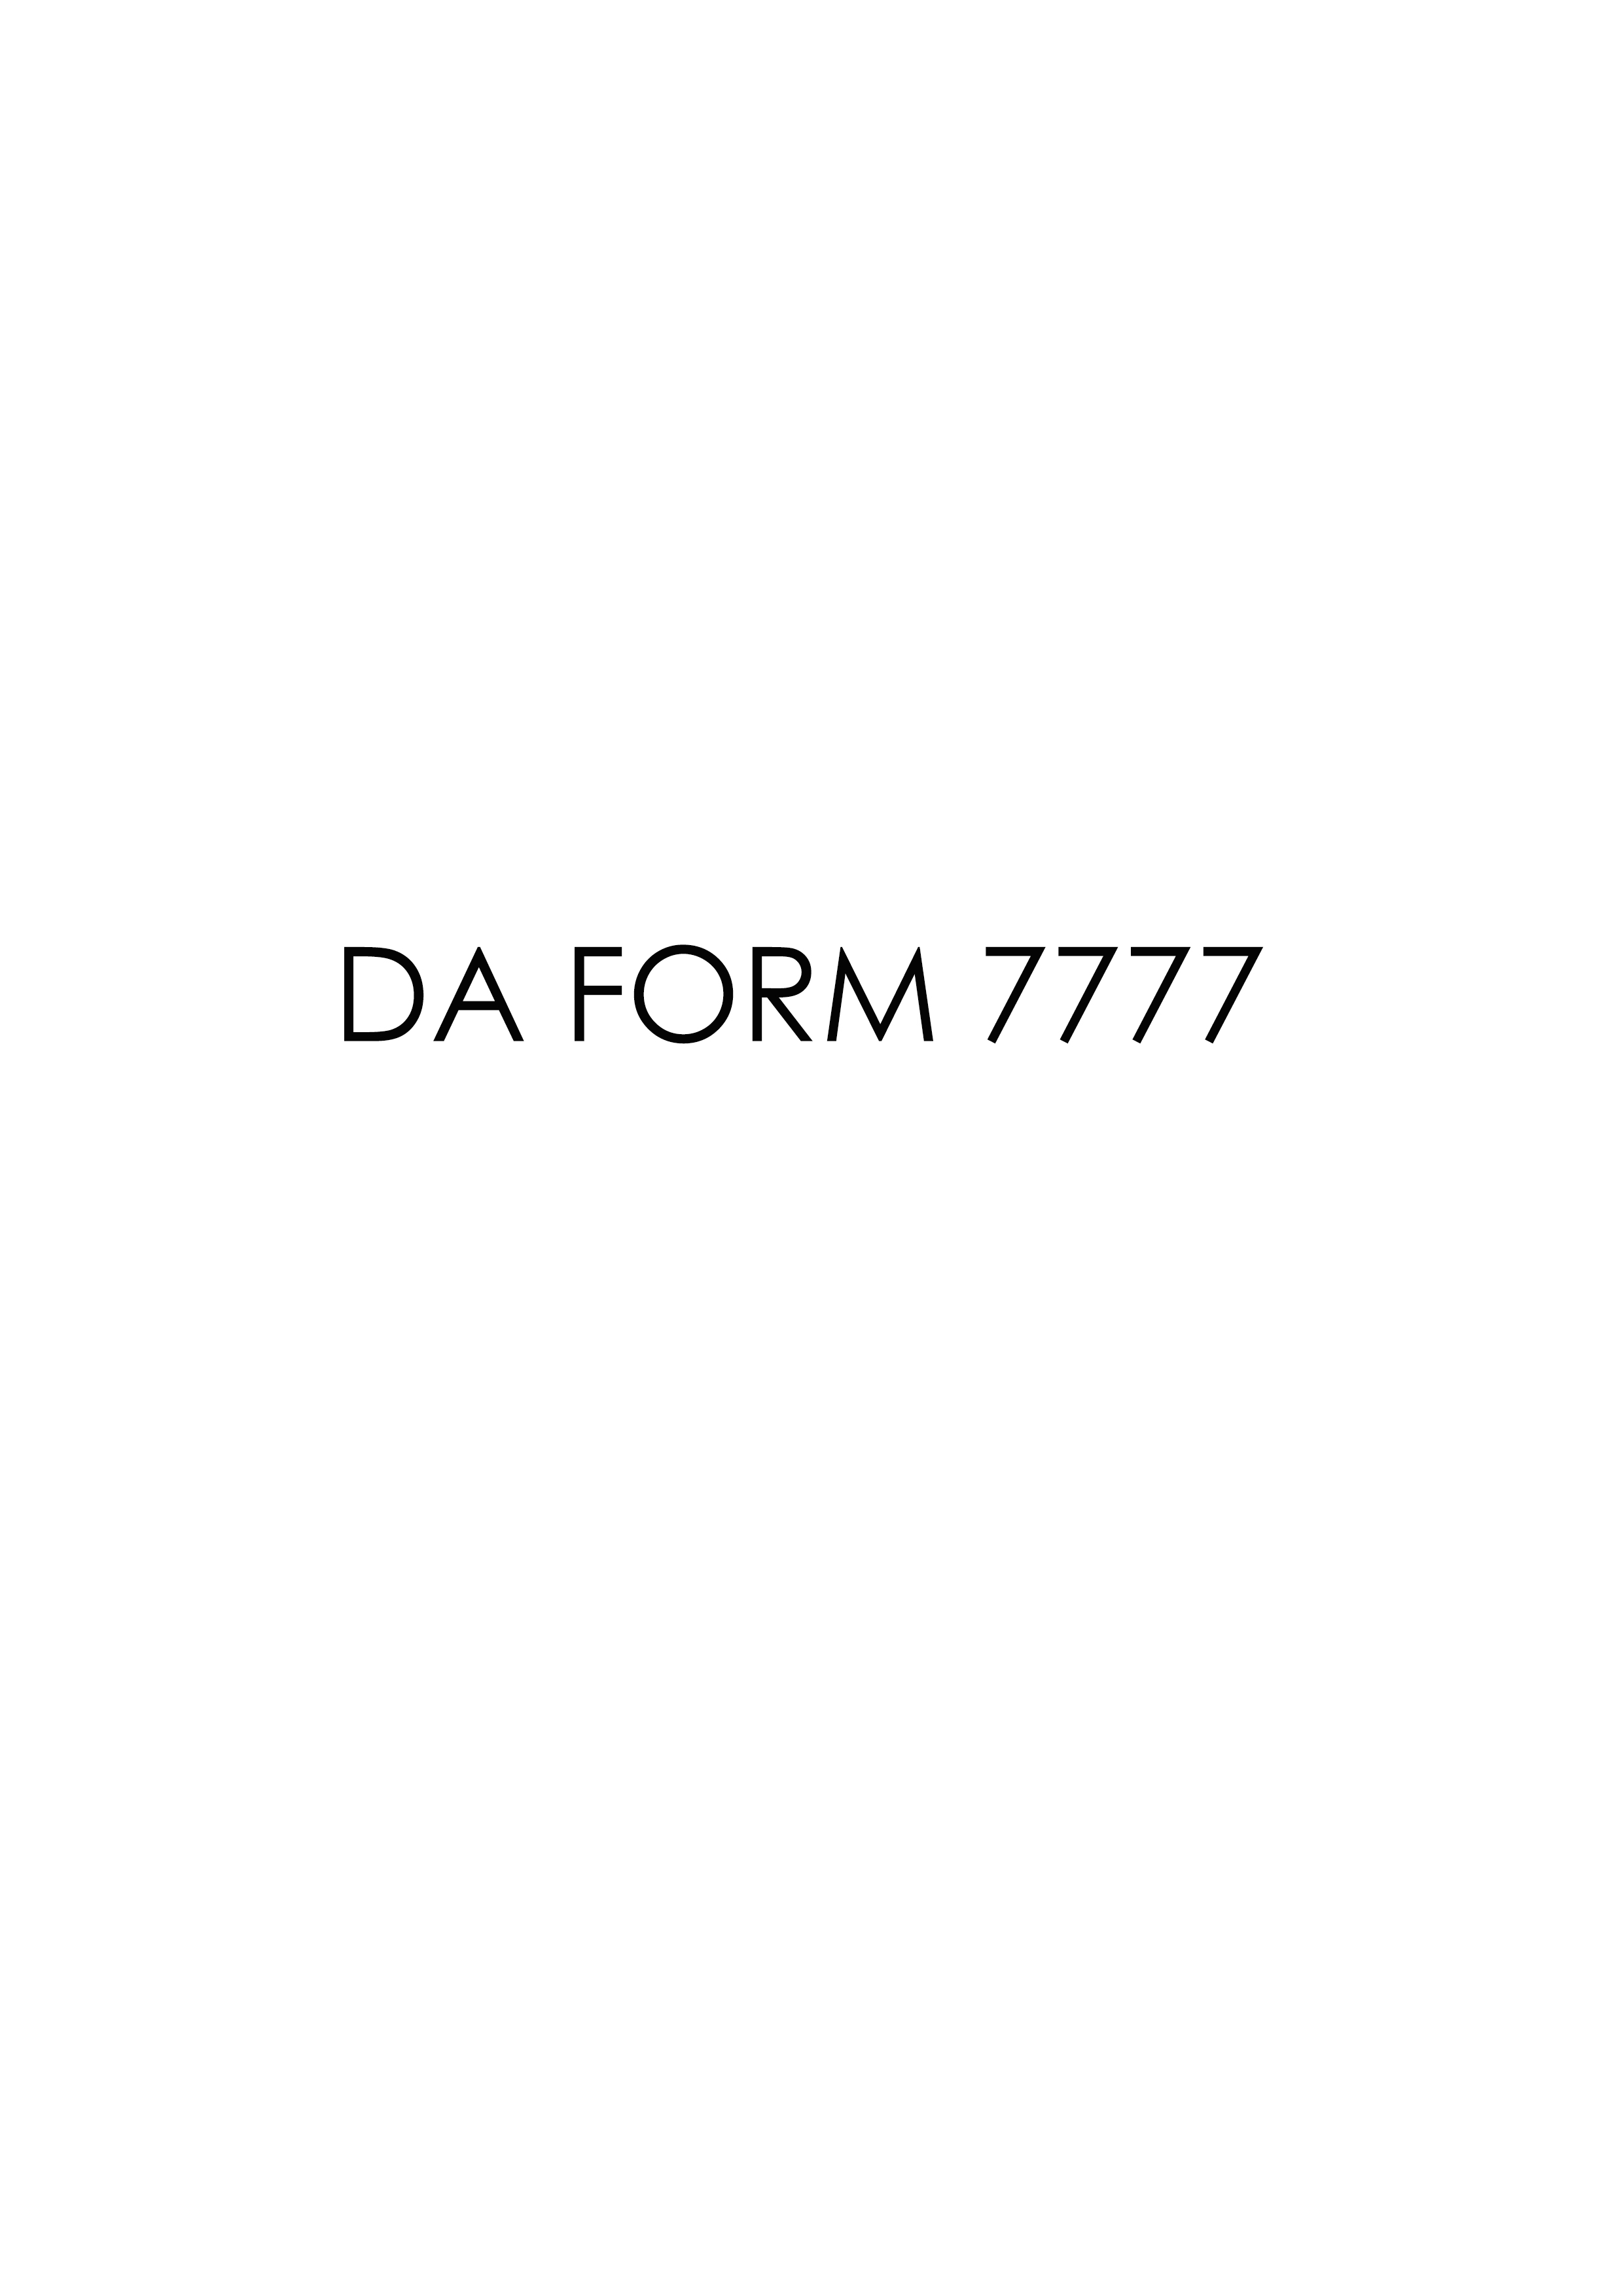 Download da form 7777